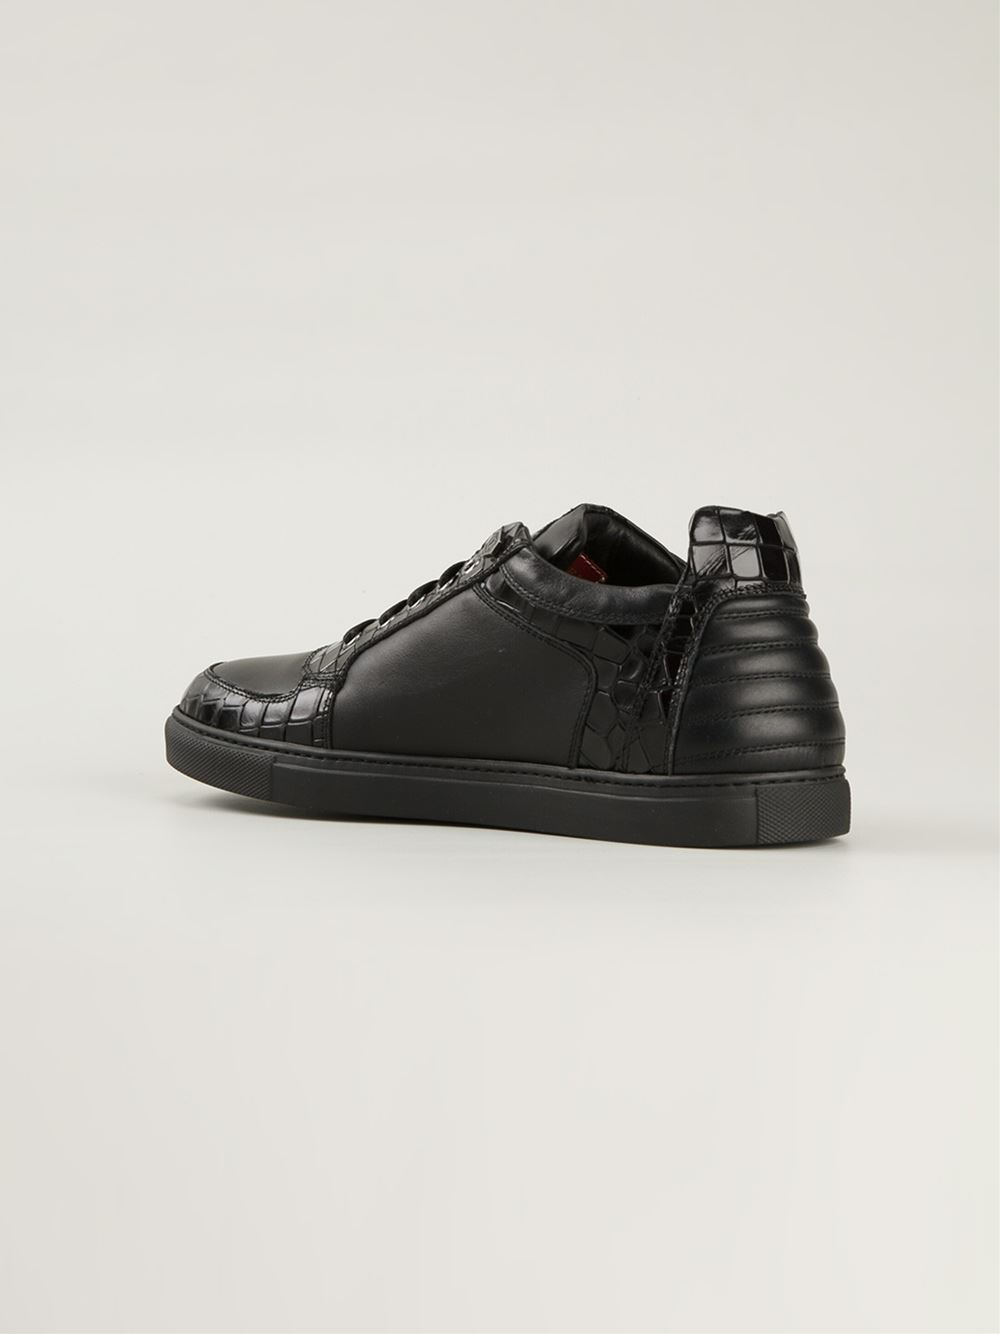 Philipp Plein Black Croc Embossed Leather Tusk Lace Up Sneakers Size 43 Philipp  Plein